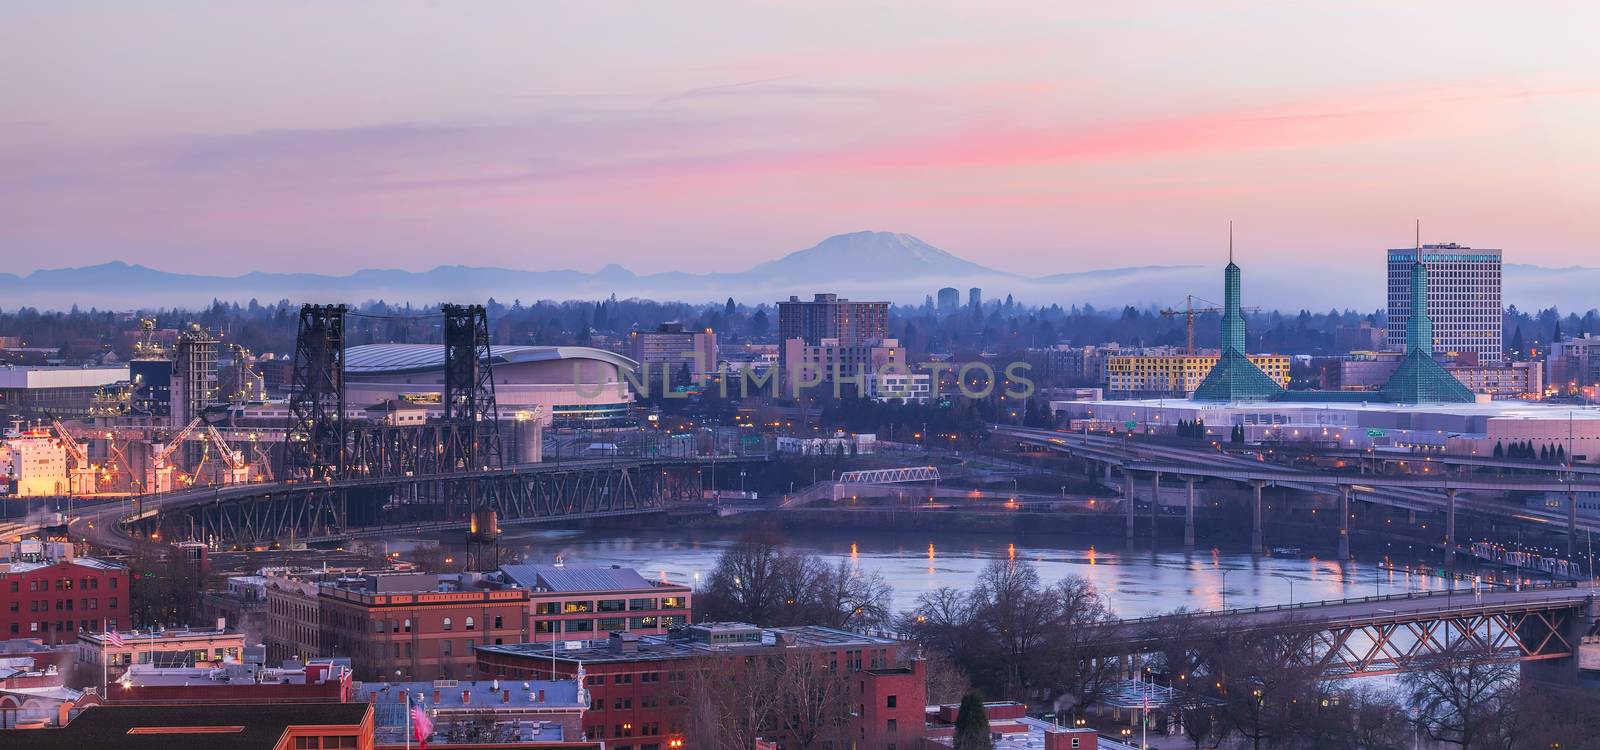 Portland Oregon Cityscape at Sunrise Panorama by jpldesigns